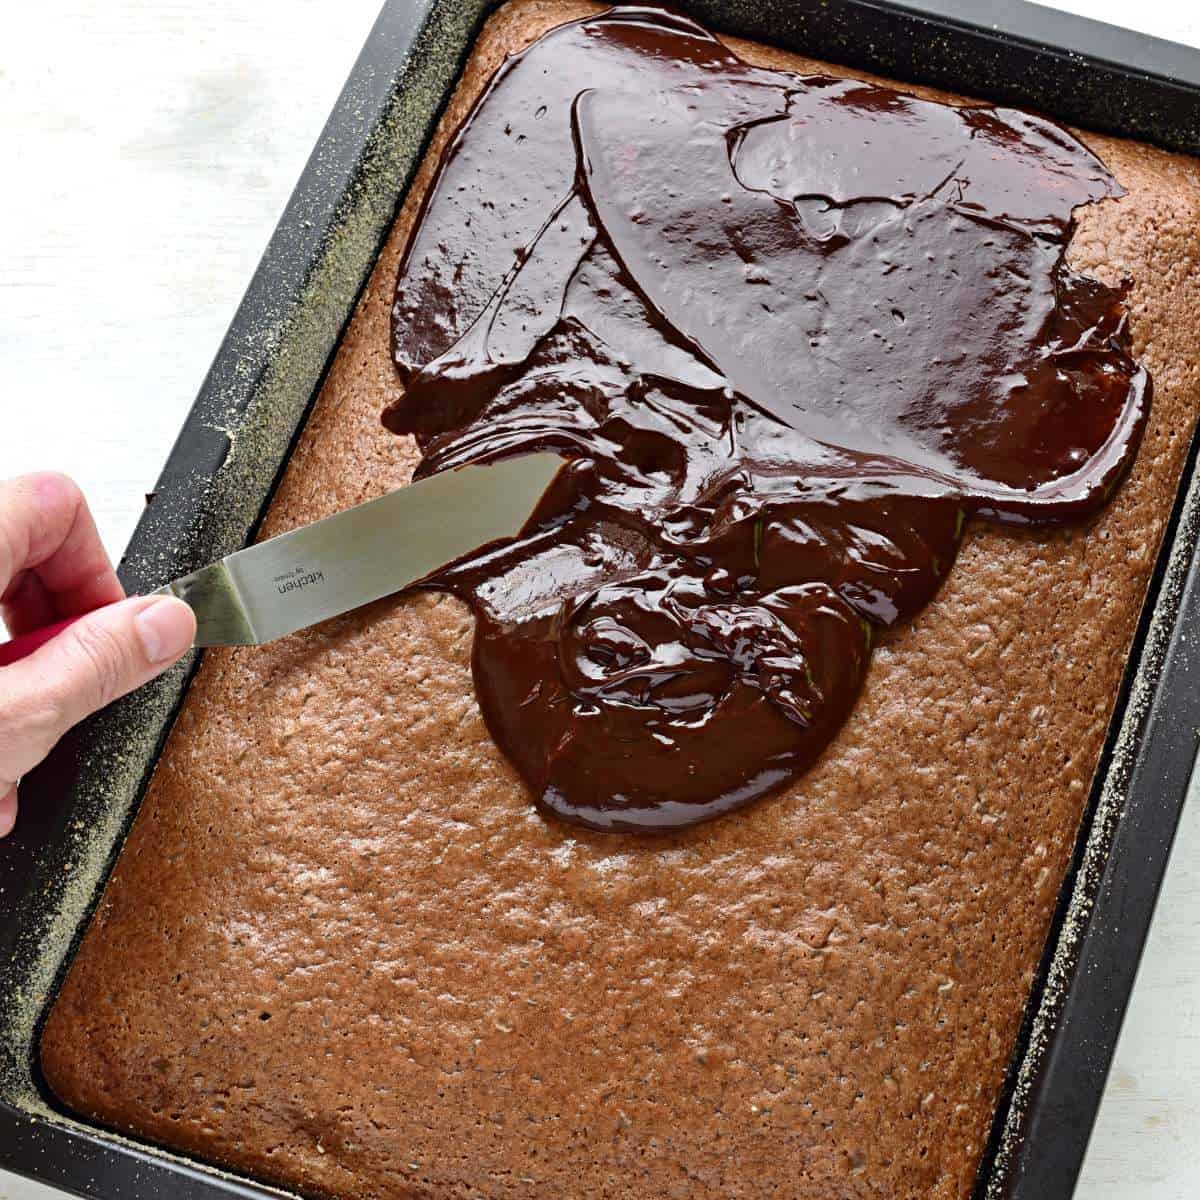 Spreading chocolate glaze over buttermilk sheet cake.